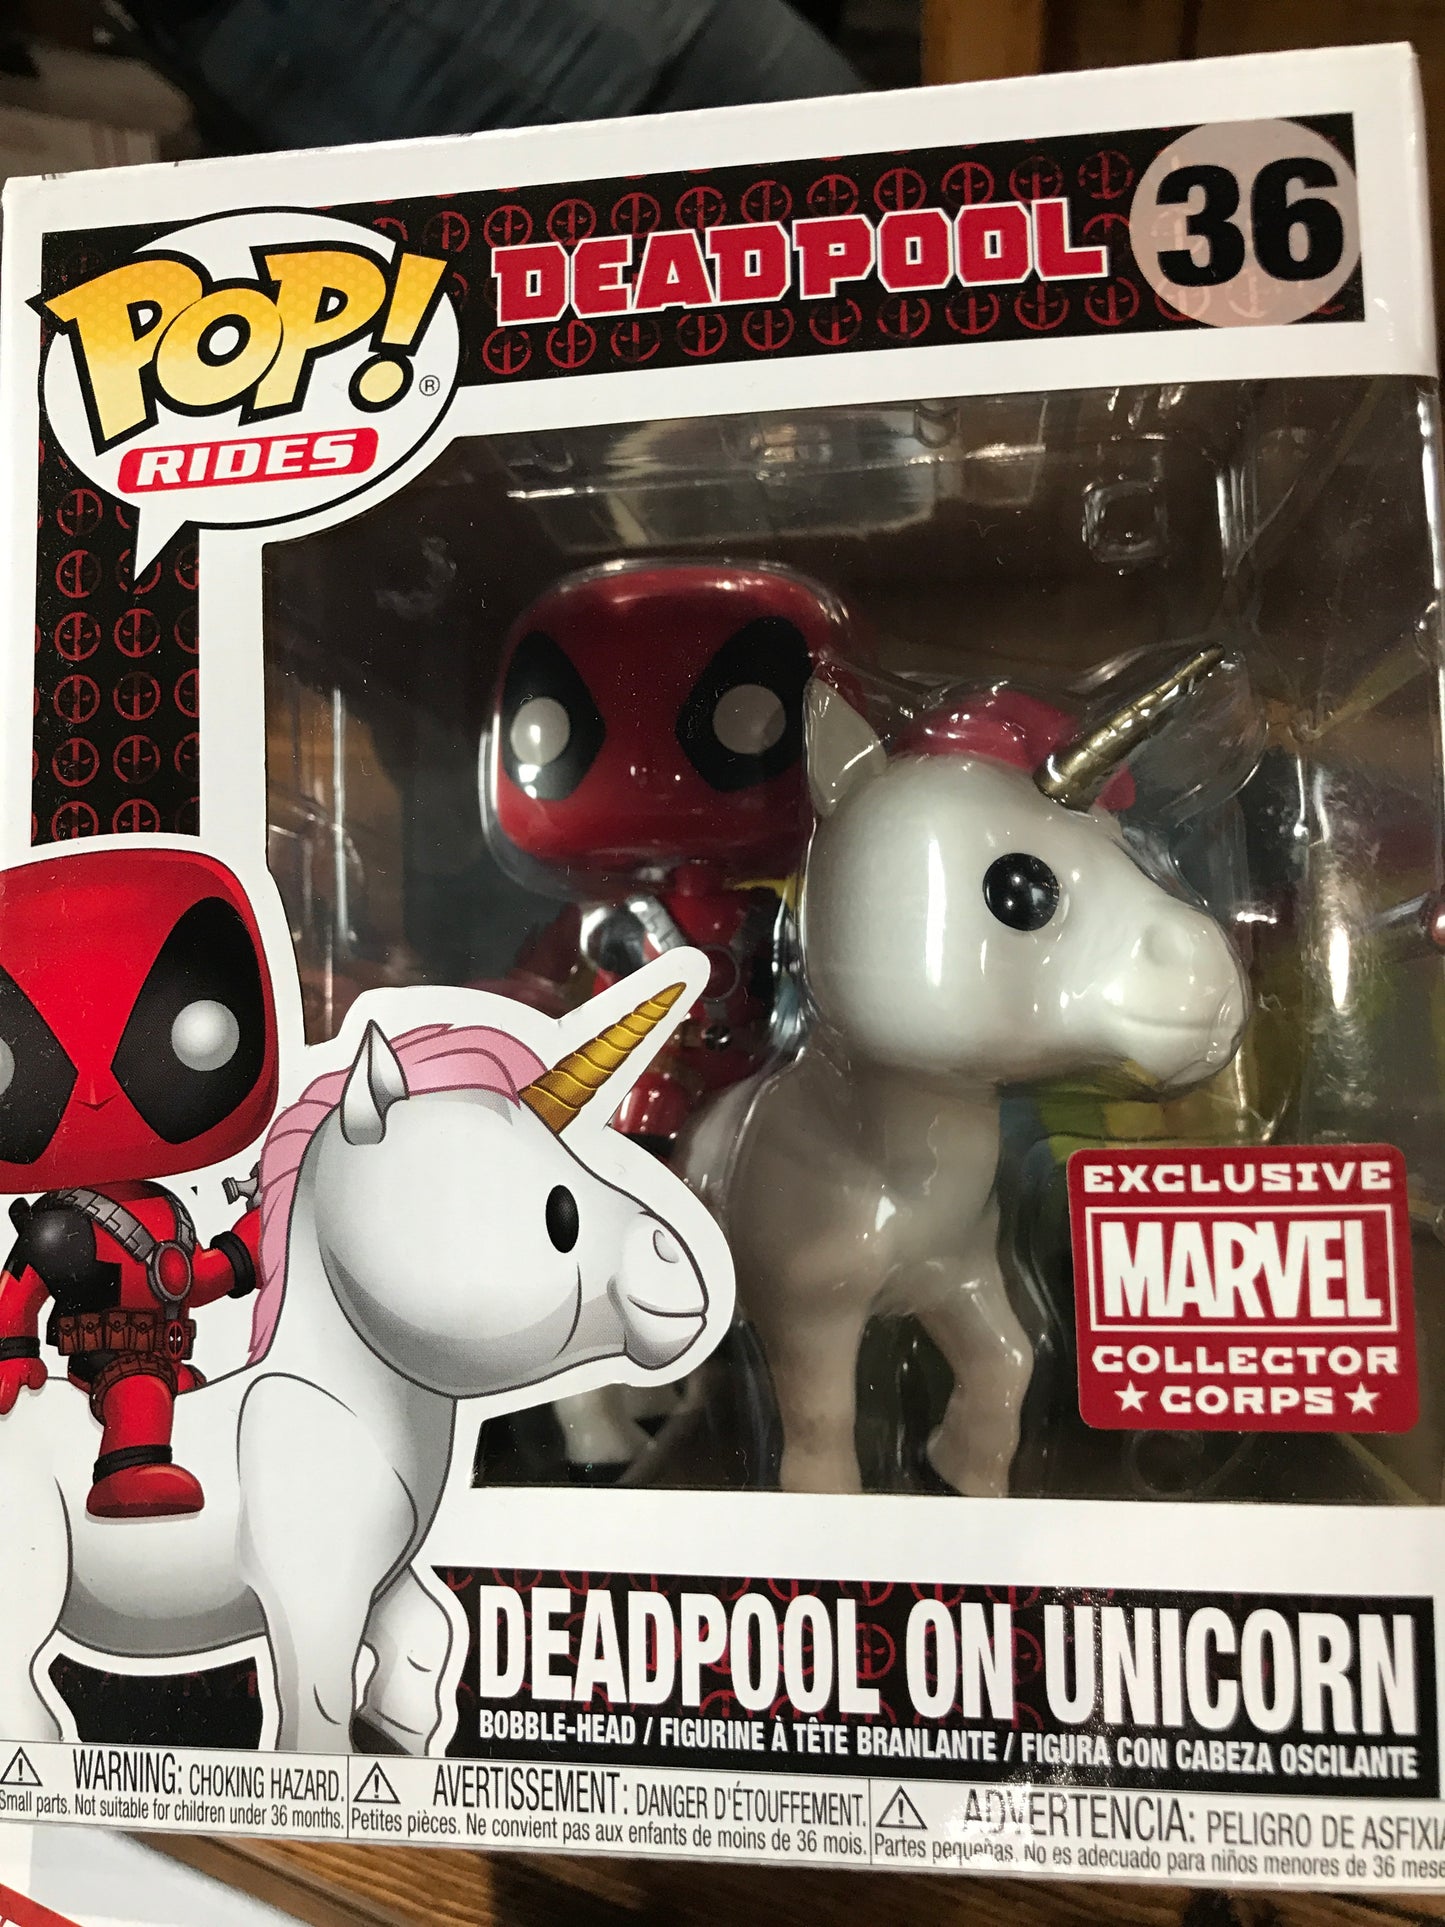 Deadpool Rides Exclusive 36 Funko Pop! Vinyl figure Marvel